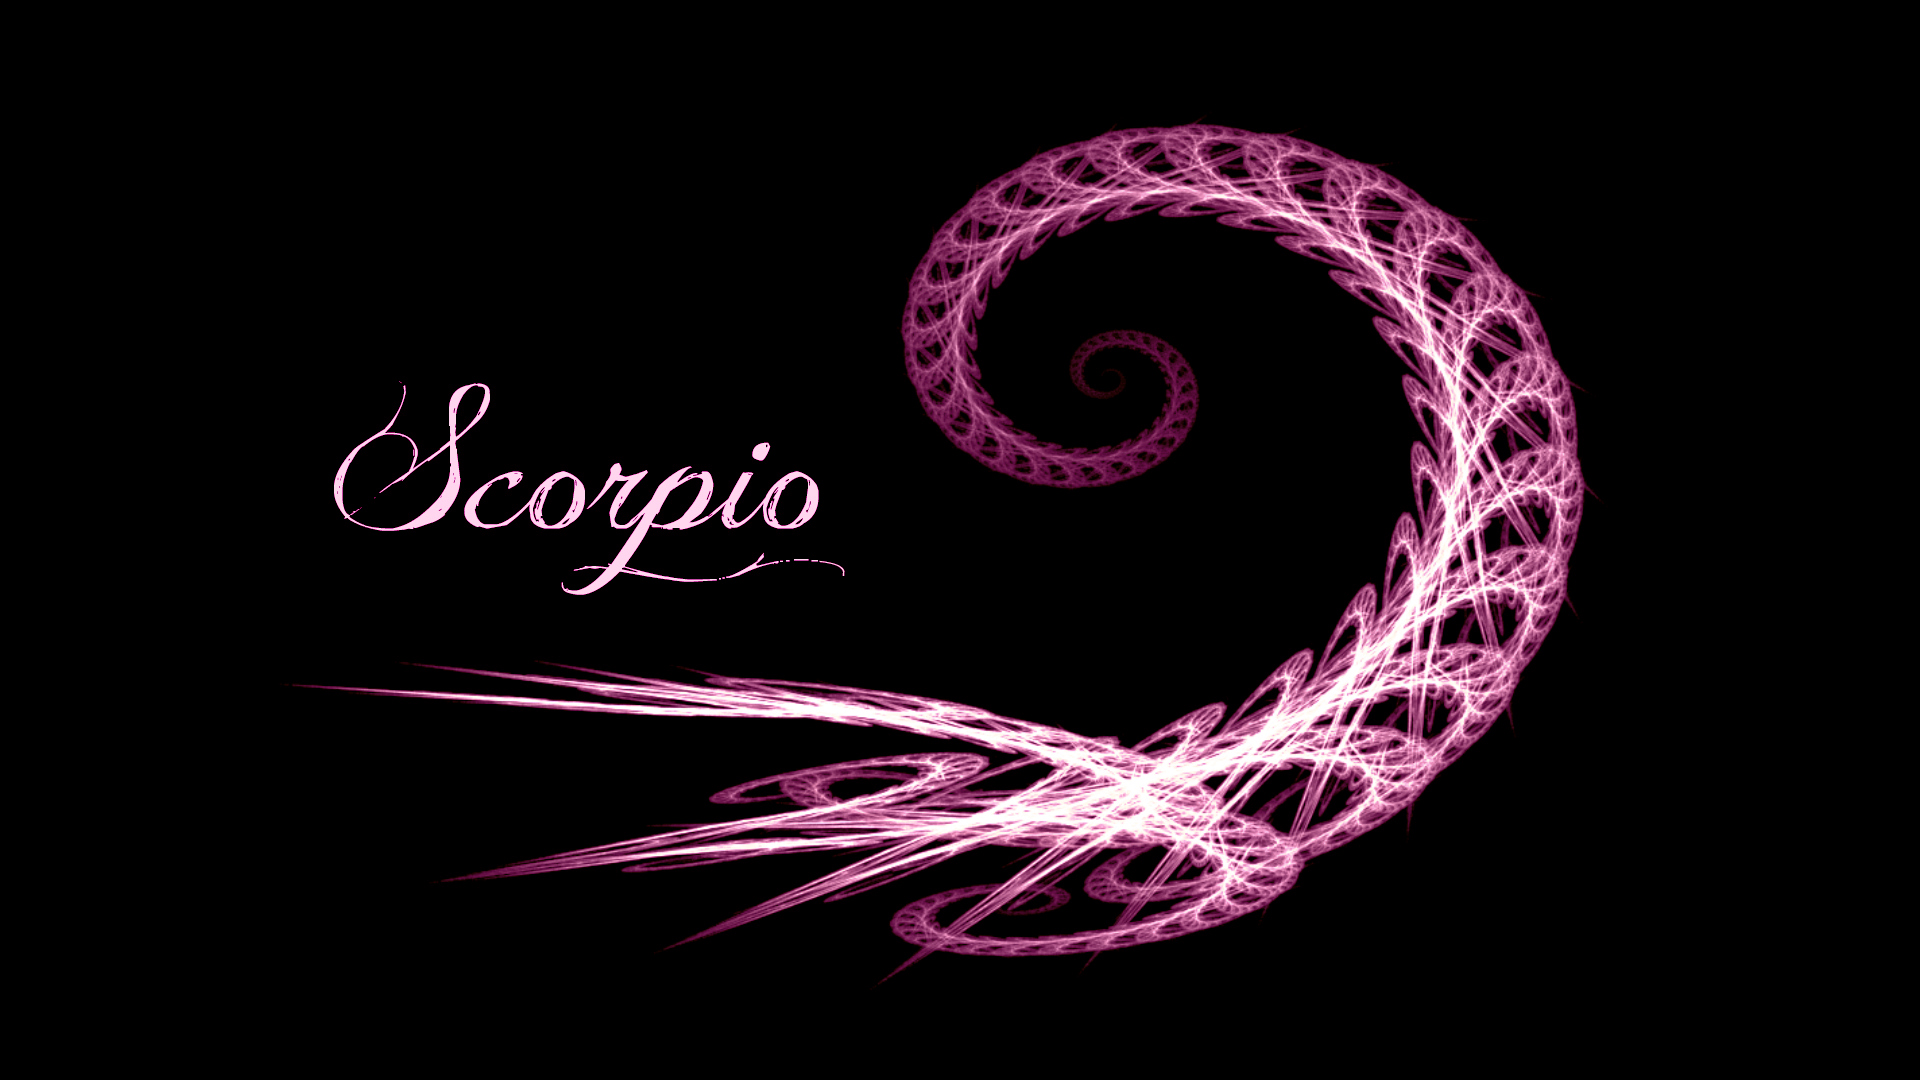 Scorpio Wallpaper